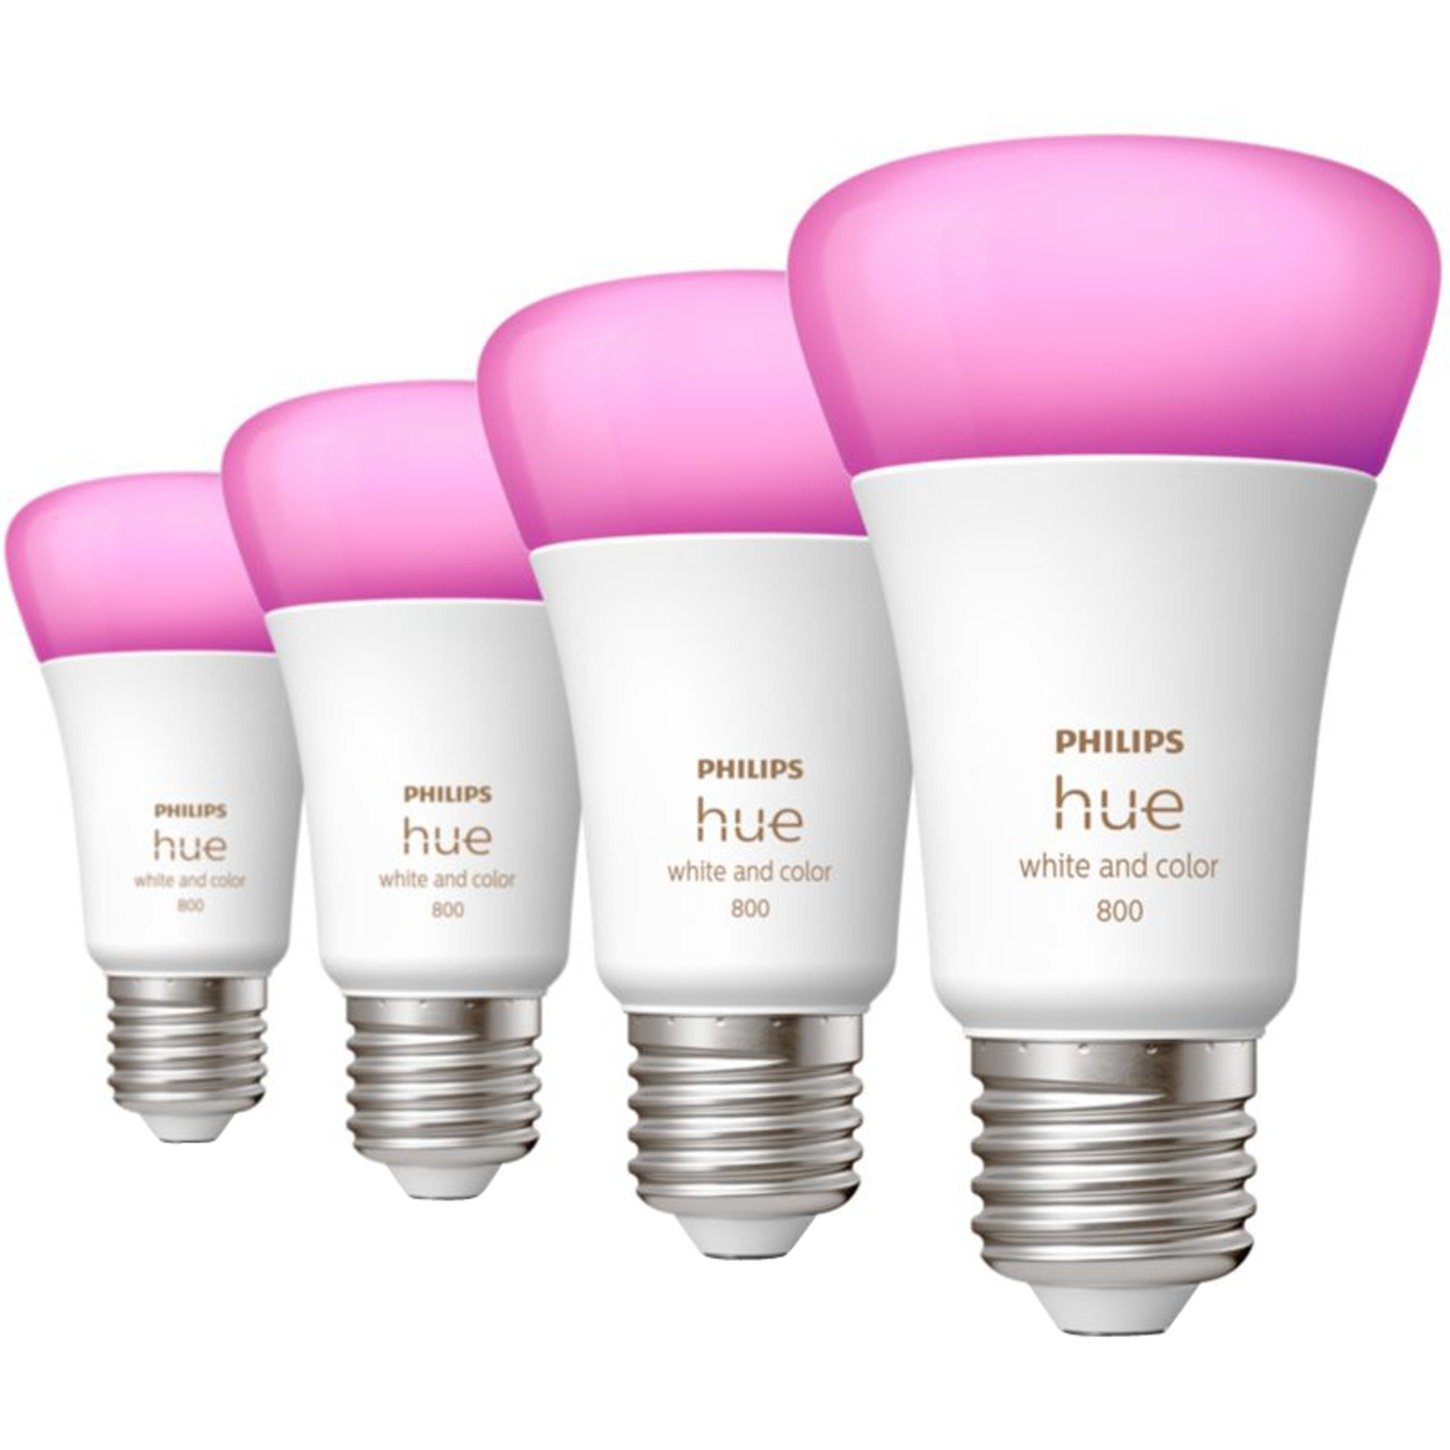 Image of Alternate - Hue White & Color Ambiance E27, LED-Lampe online einkaufen bei Alternate